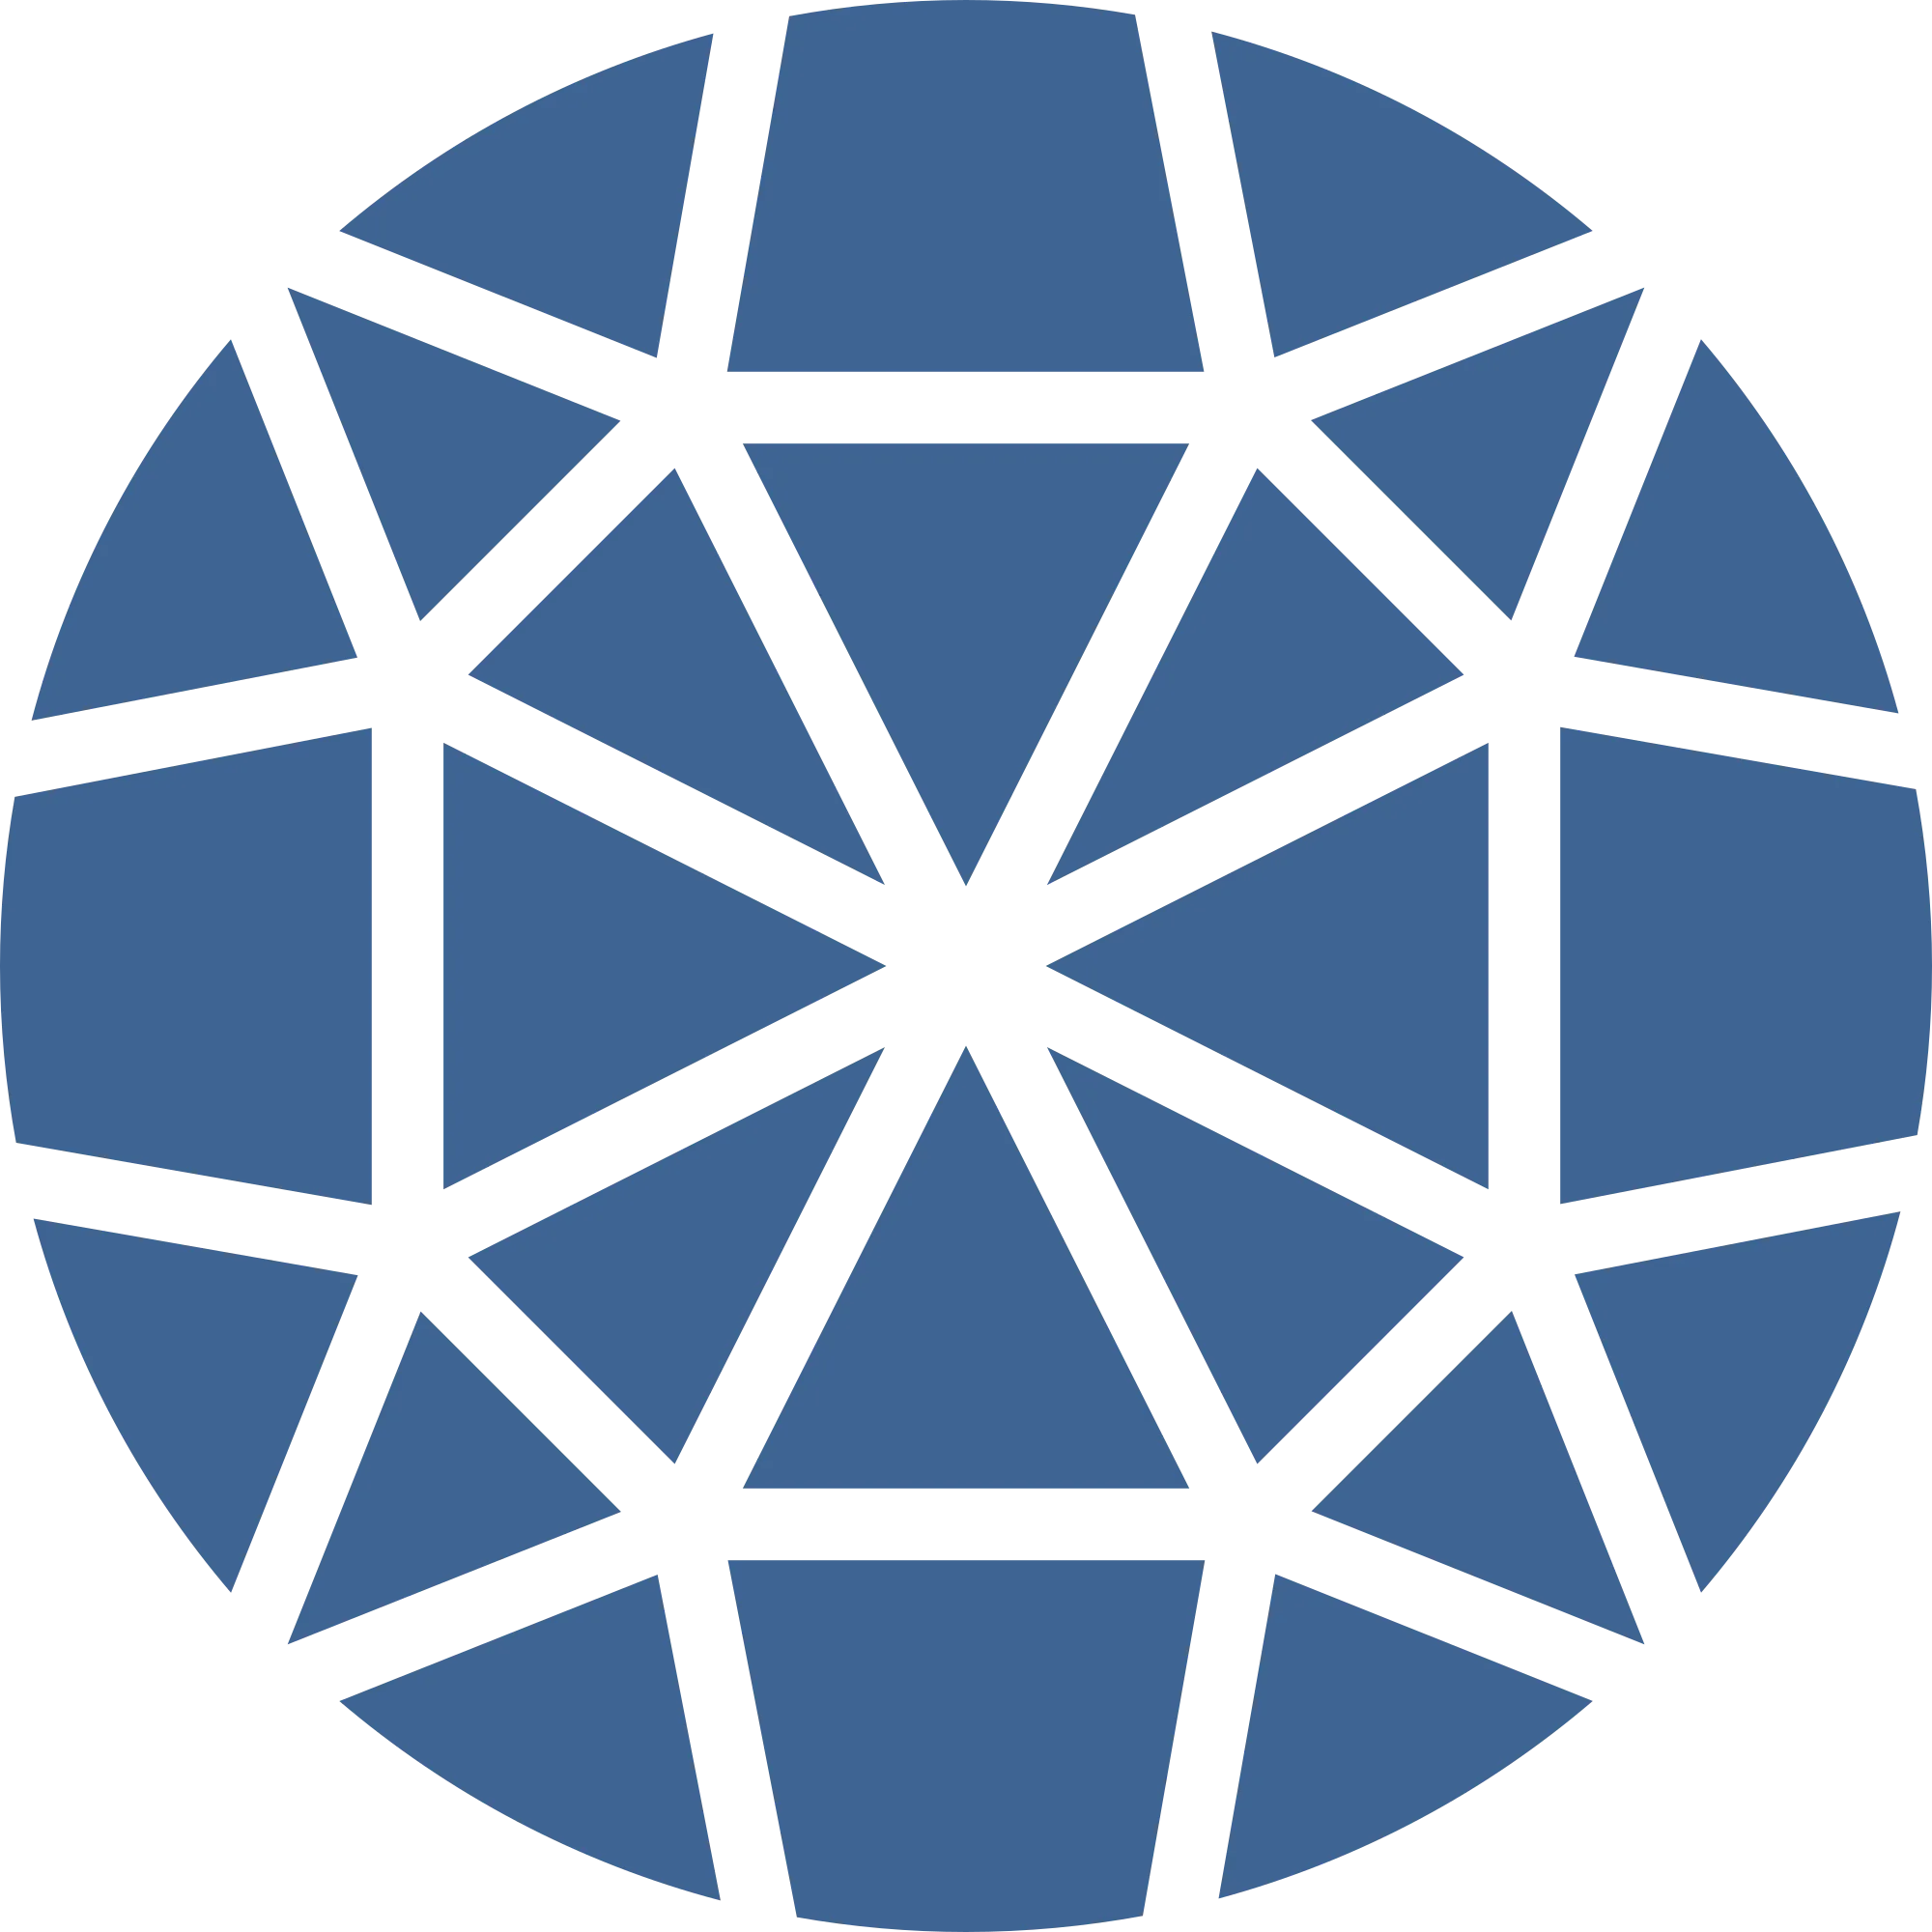 Diamond logo in png format